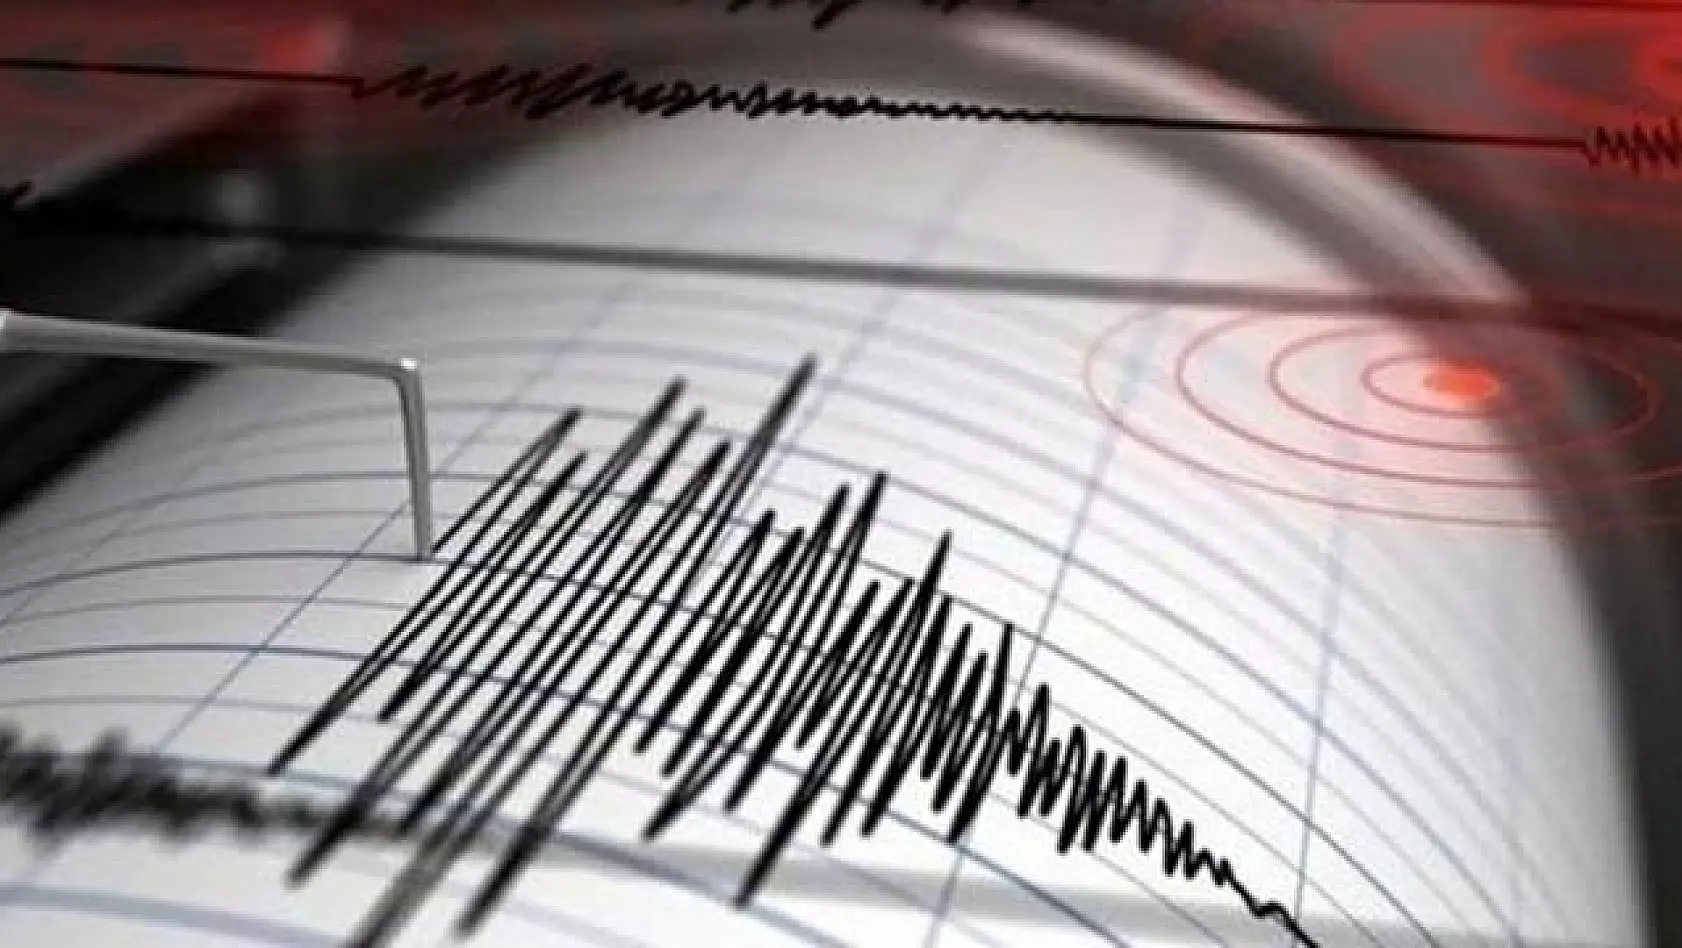 Malatya'da deprem...Elazığ'da da hissedildi 